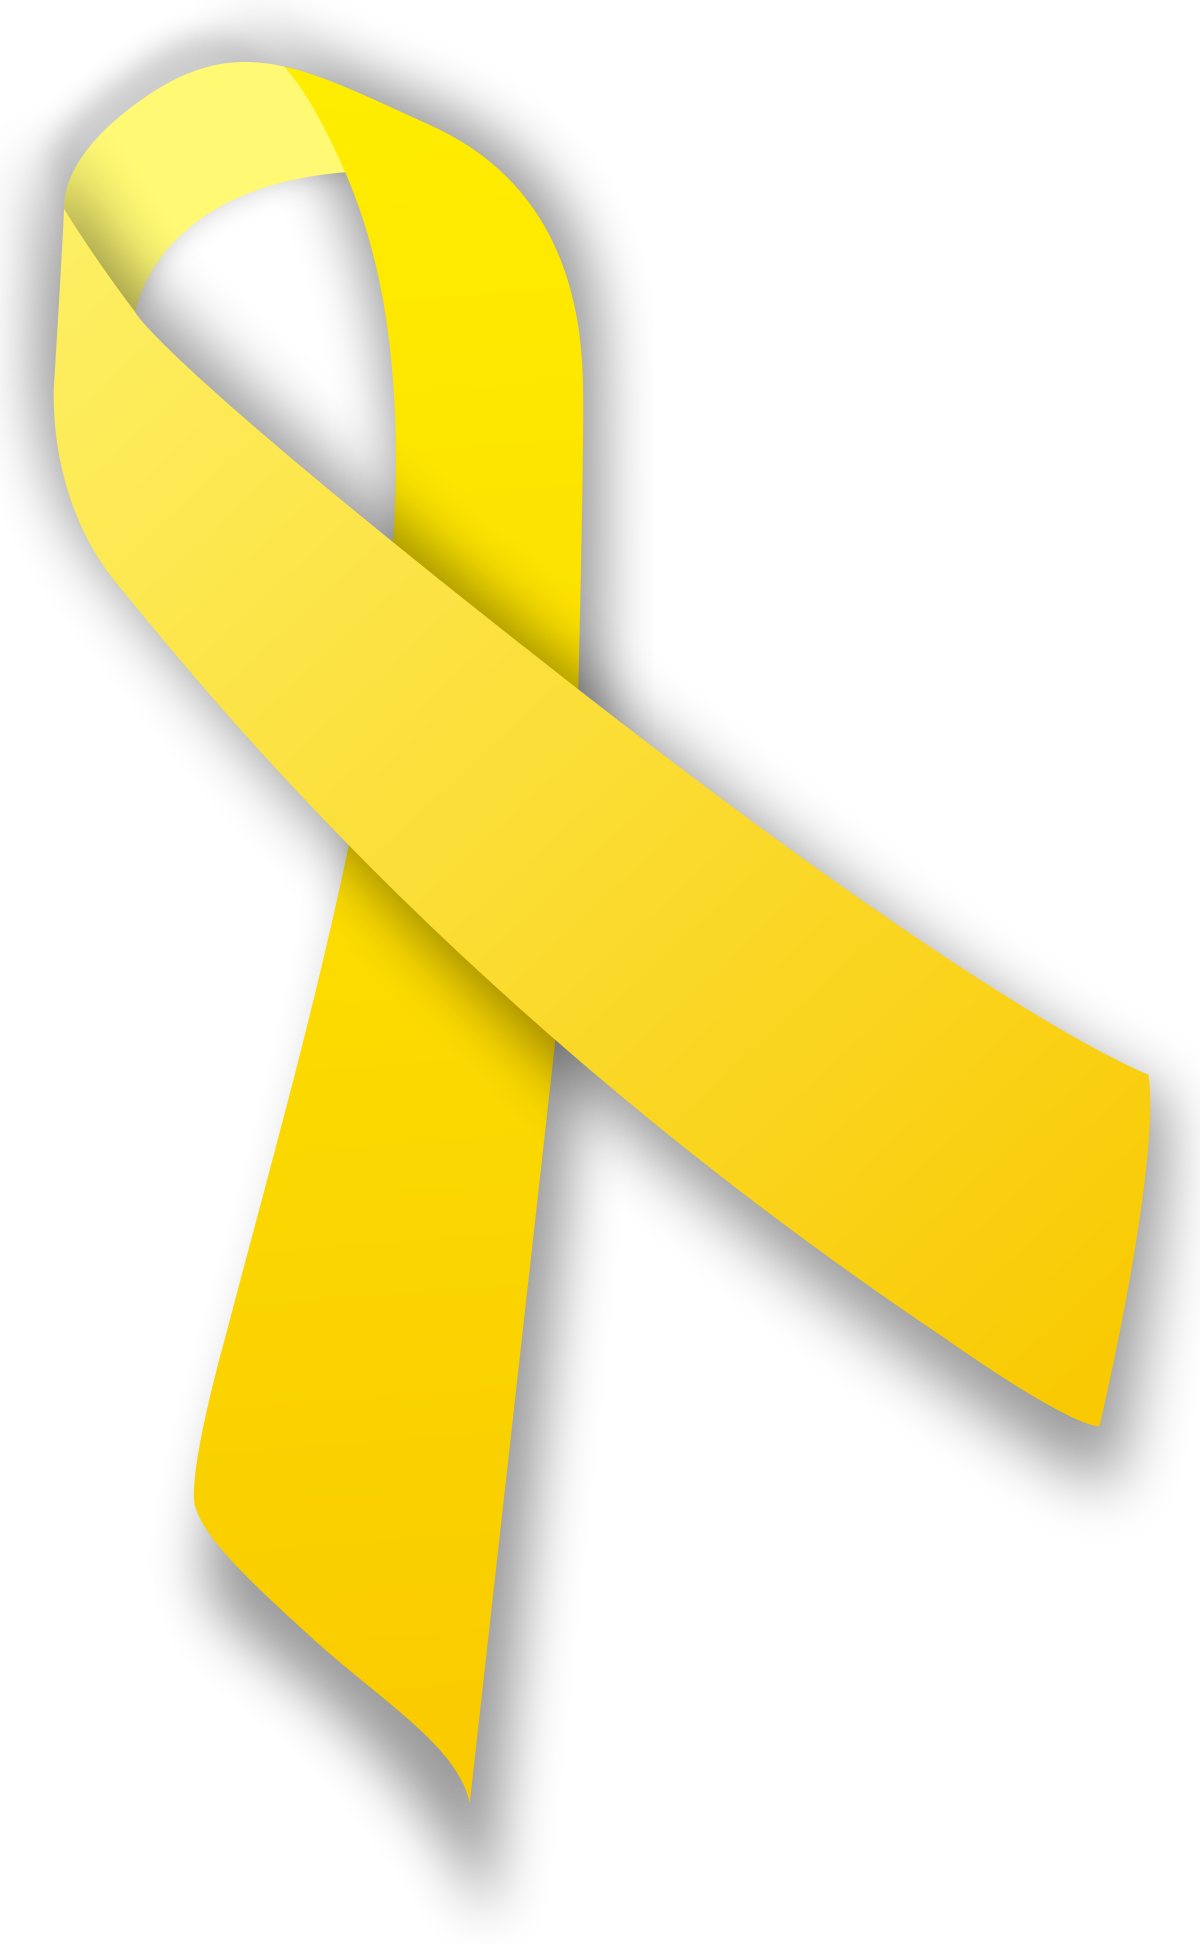 The Yellow Awareness Ribbon Denotes Suicide Awareness - Yellow Ribbon Png (1200x1944)